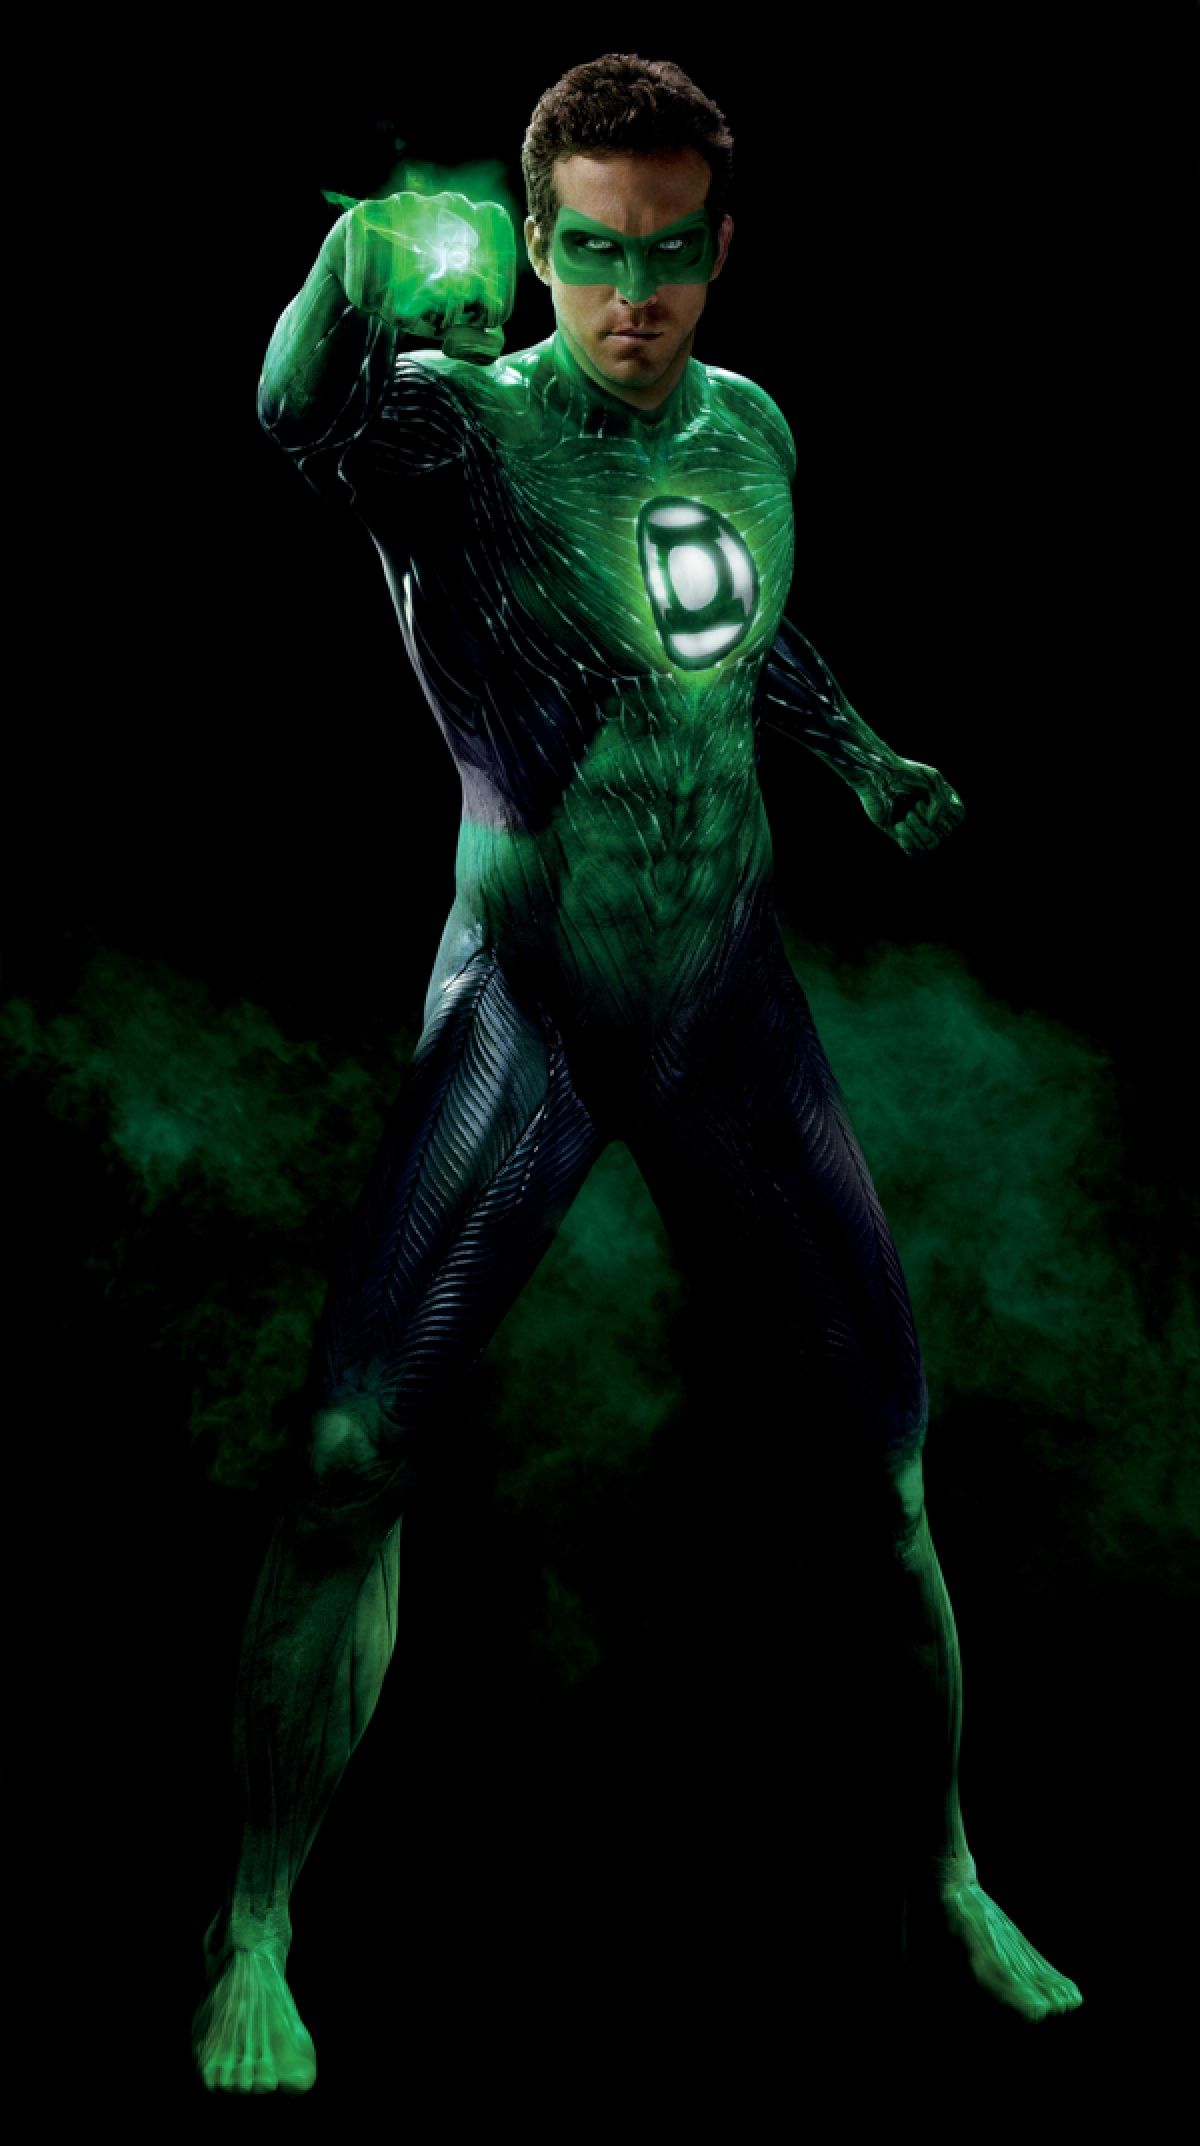 Full Costume Photo Of Ryan Reynolds As Green Lantern